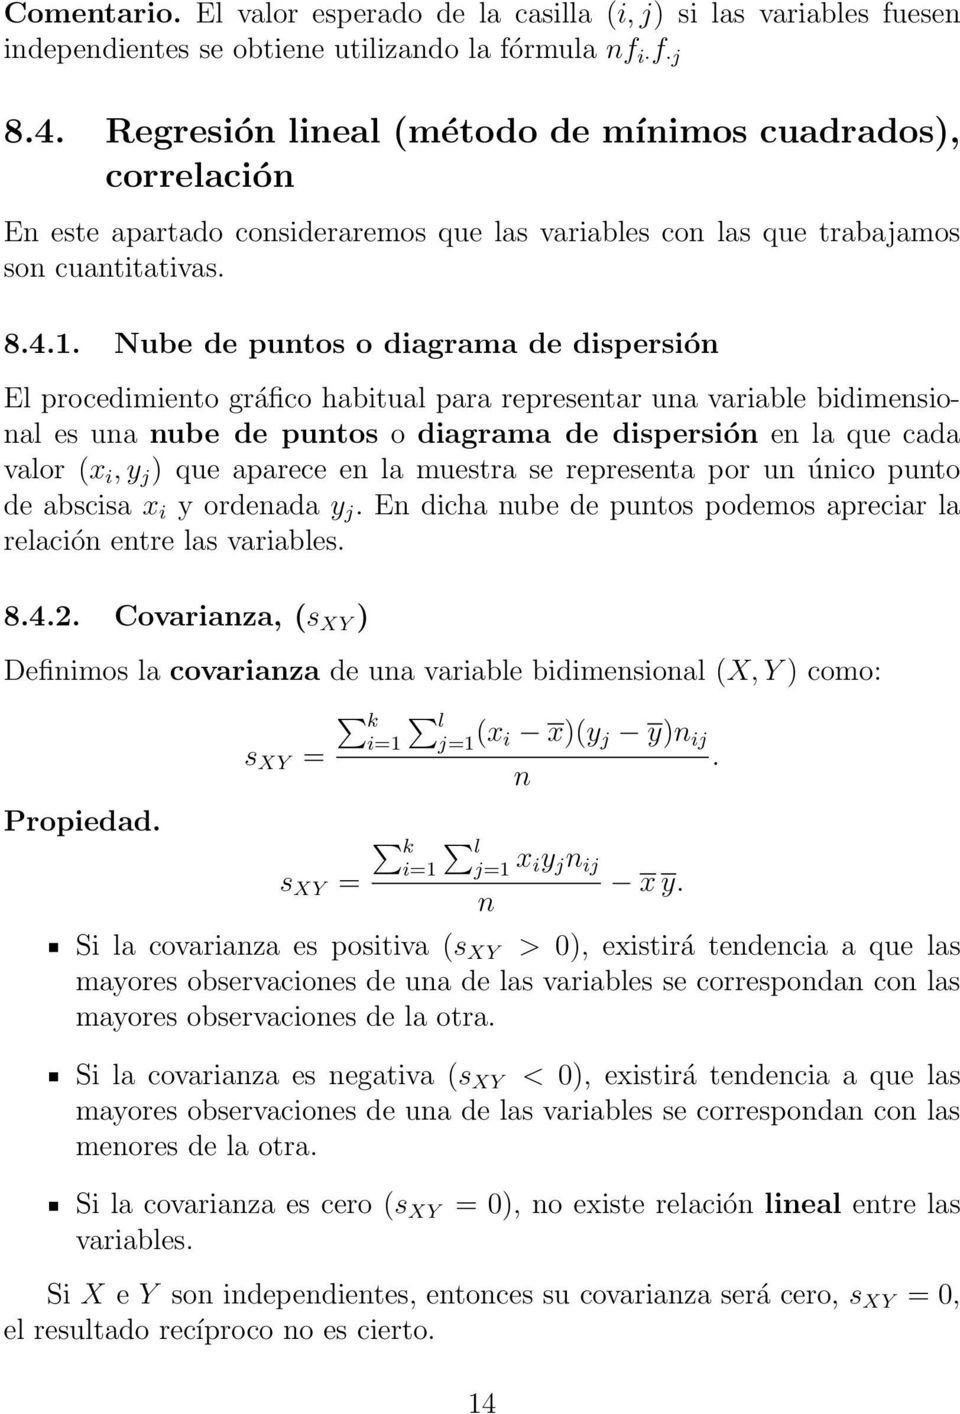 Nube de putos o diagrama de dispersió El procedimieto gráfico habitual para represetar ua variable bidimesioal es ua ube de putos o diagrama de dispersió e la que cada valor (x i, y j ) que aparece e